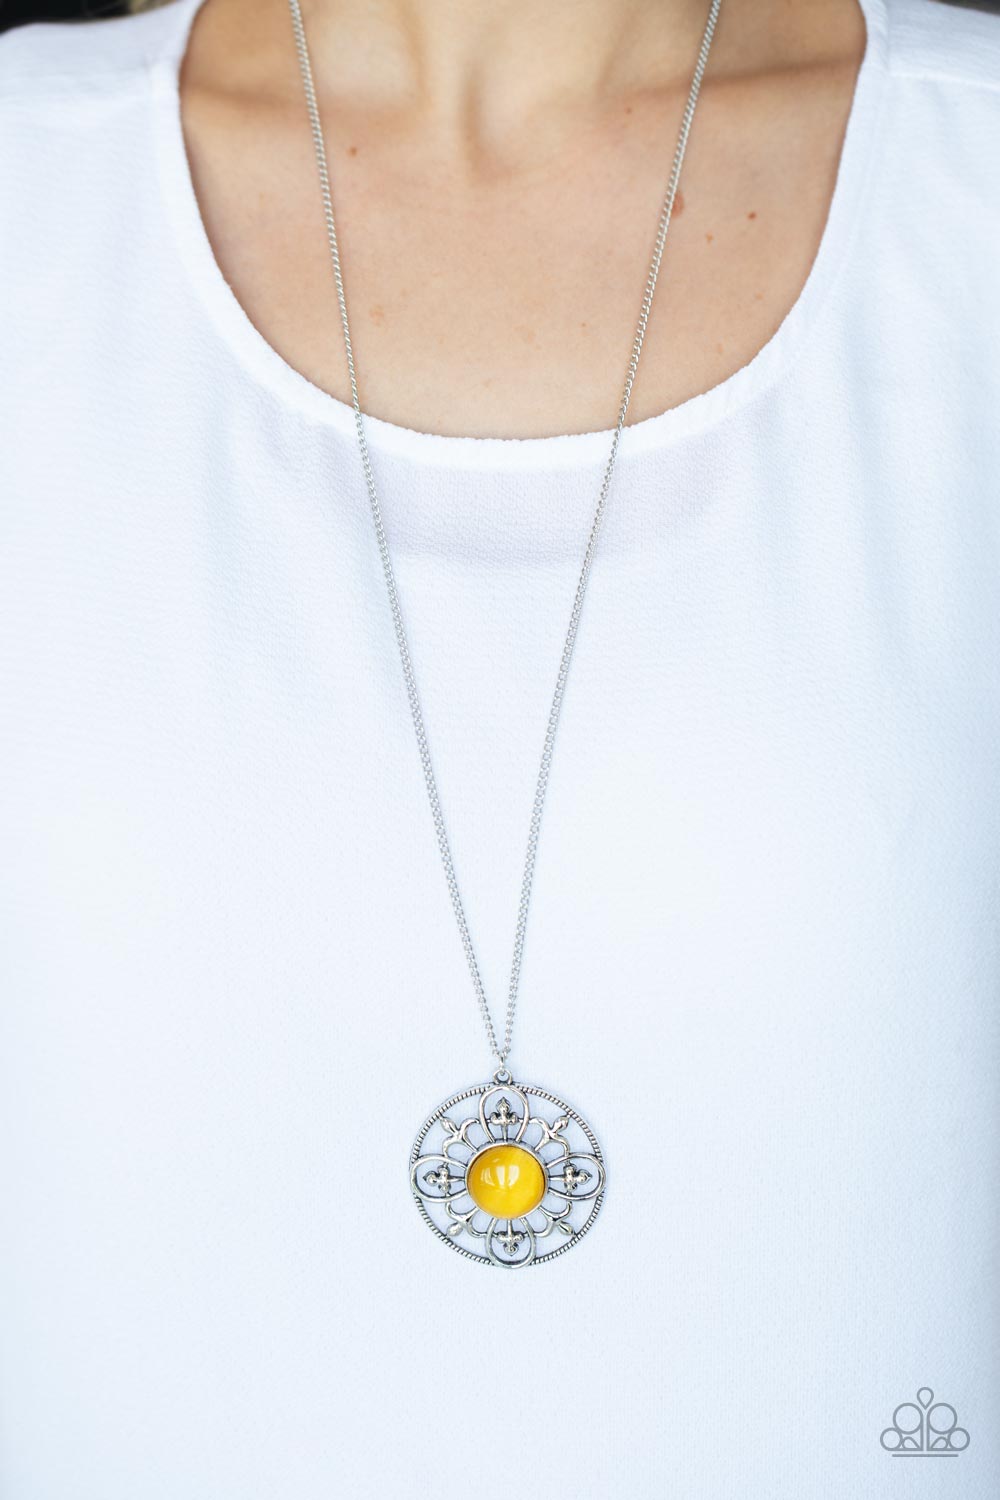 Celestial Compass - yellow - Paparazzi necklace